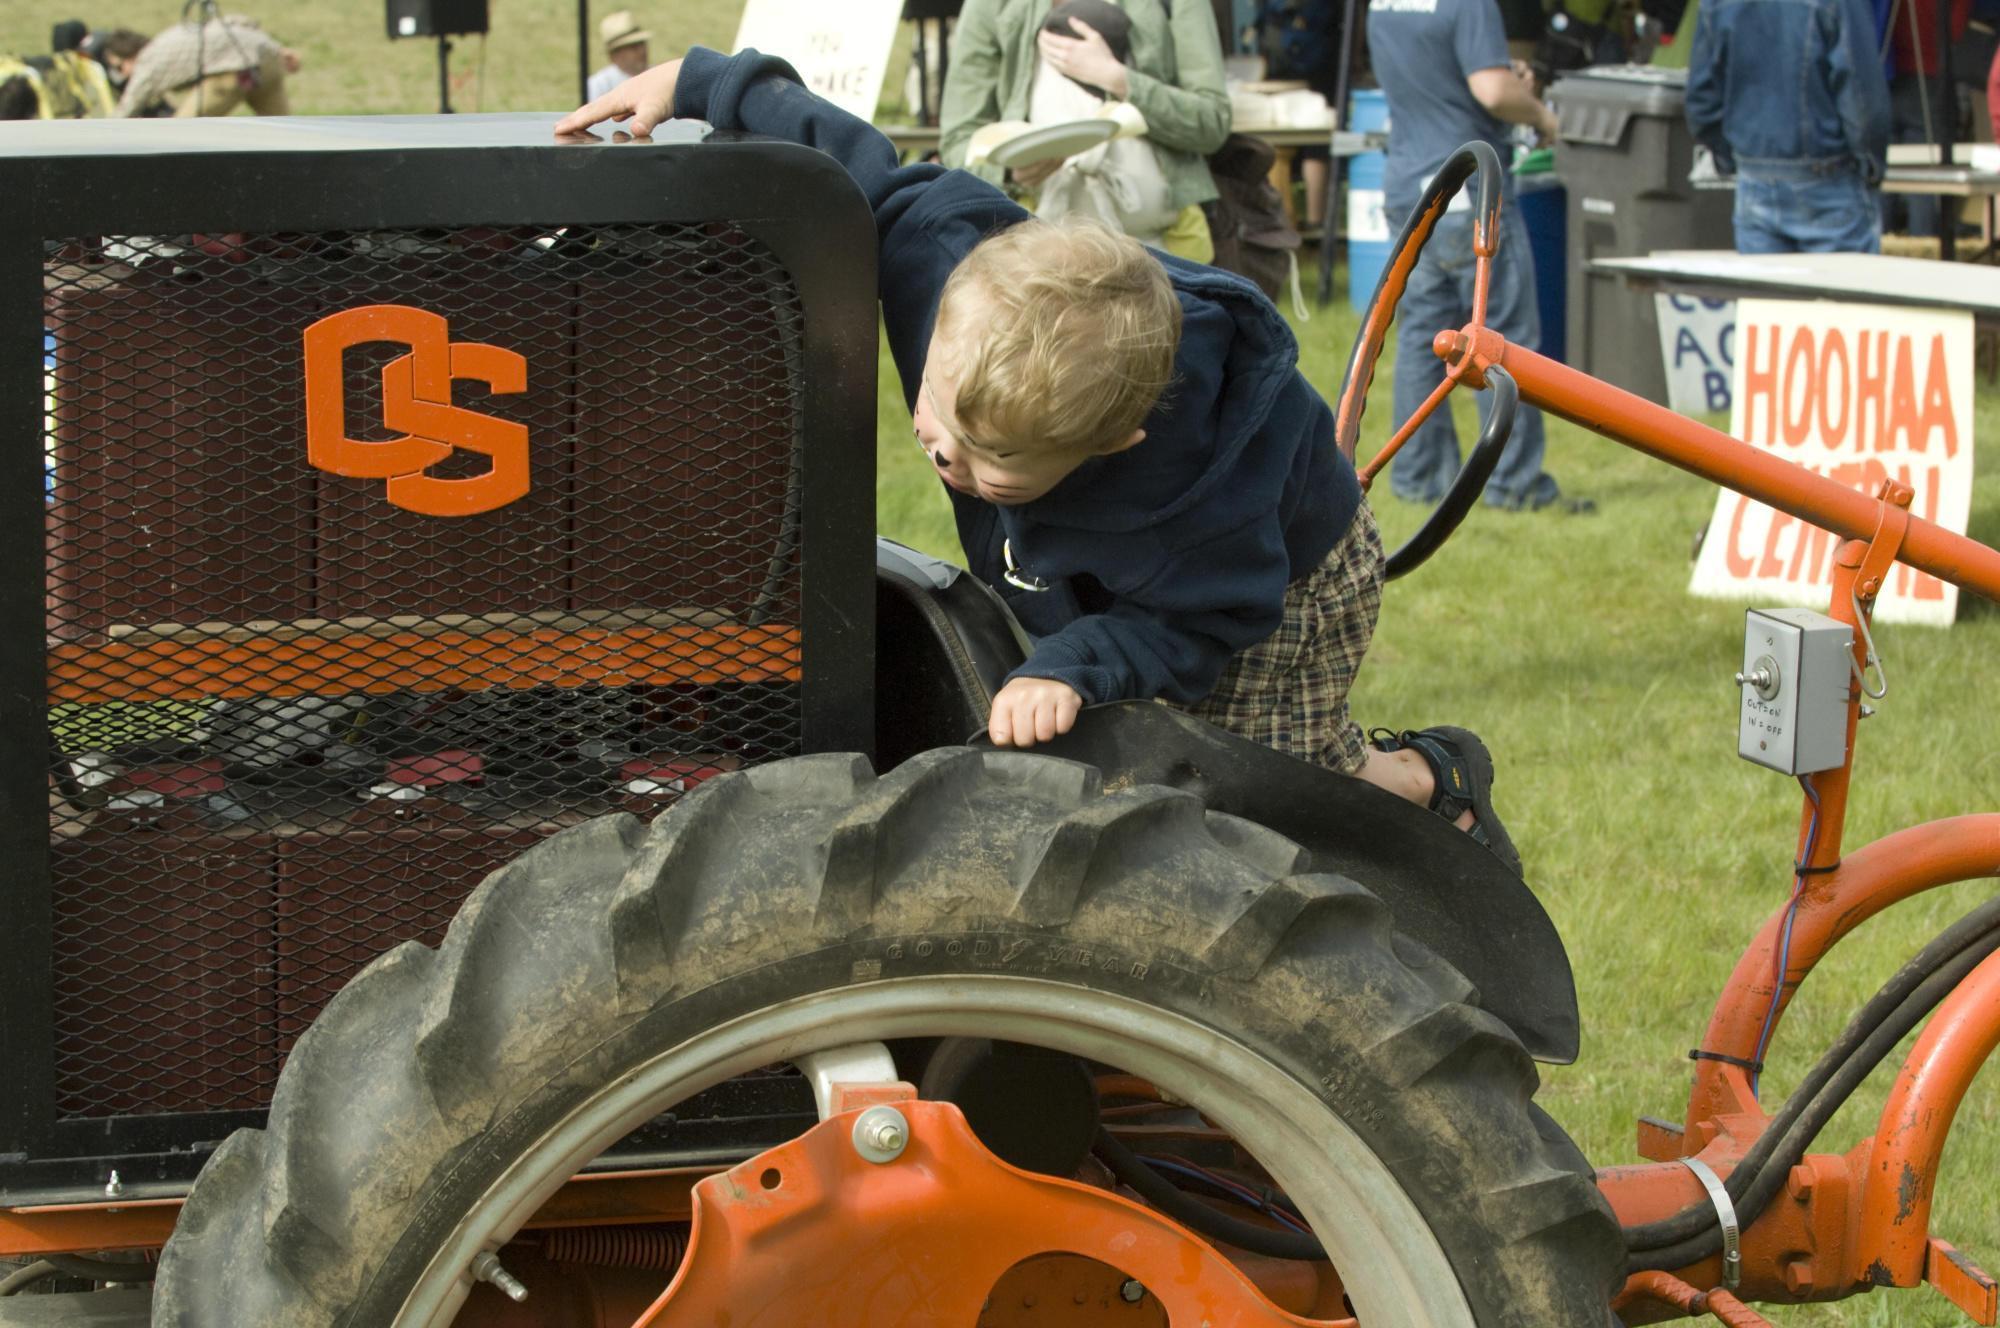 Child climbing on an OSU tractor